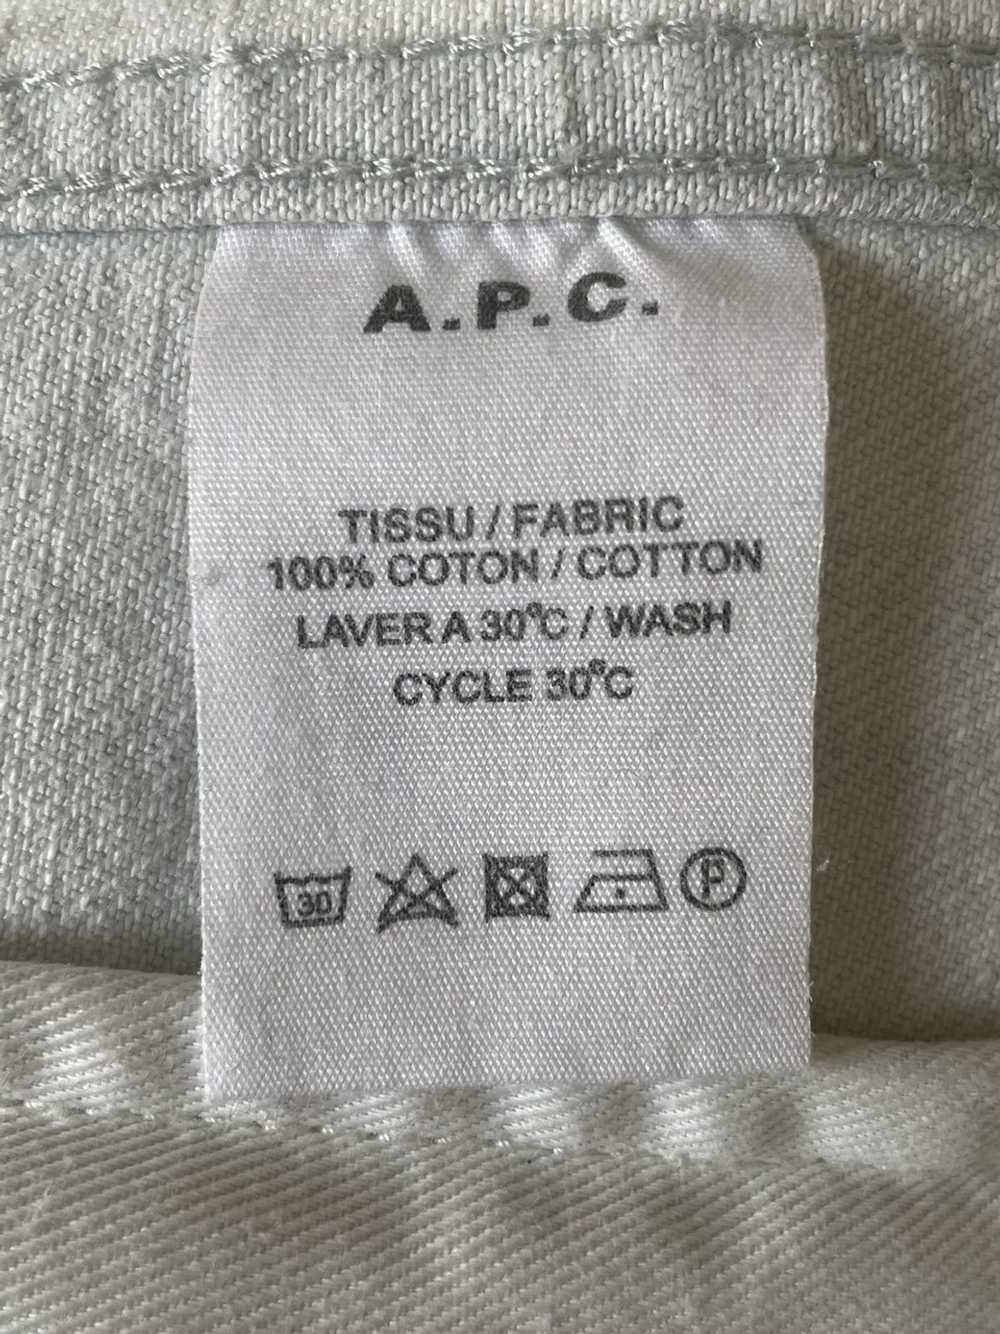 A.P.C. Light Wash Denim Jacket, Small - image 11